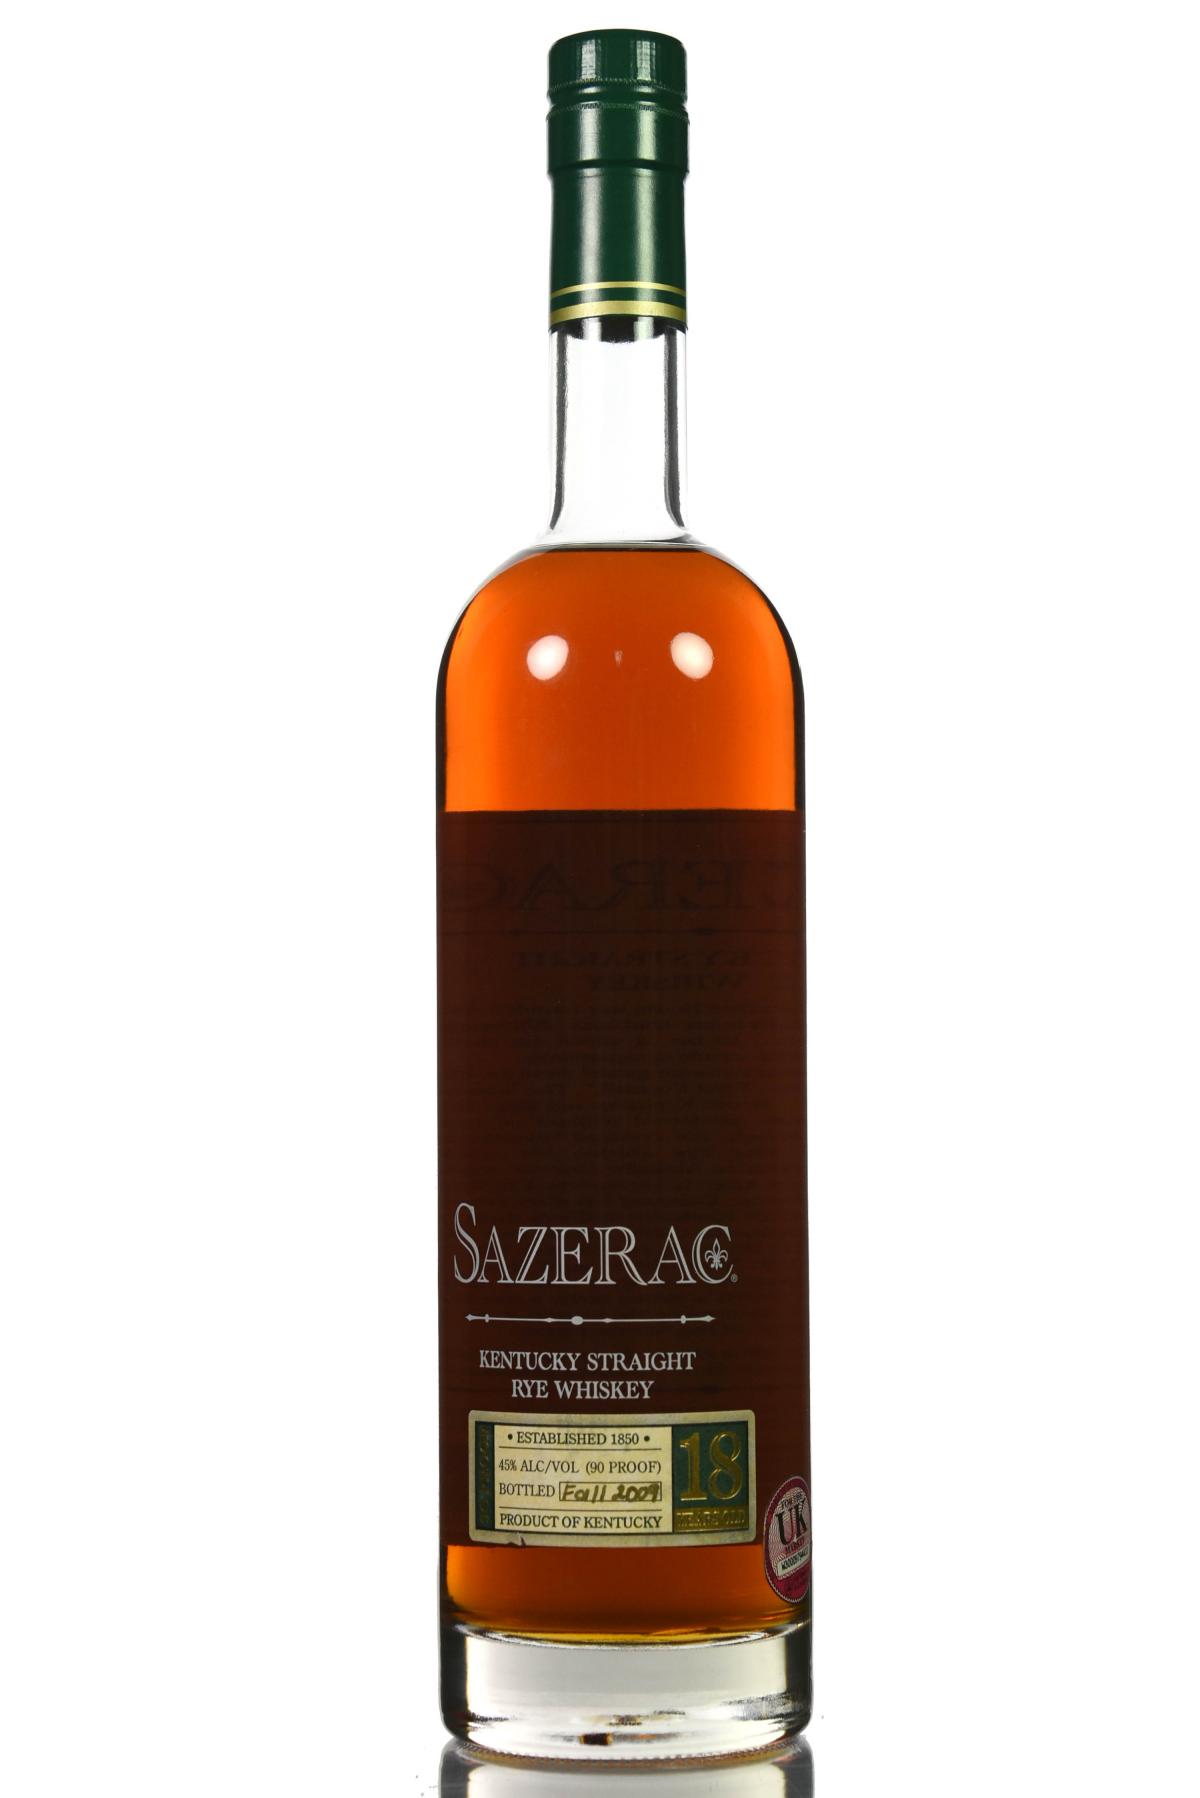 Sazerac 18 Year Old Bourbon - Fall 2009